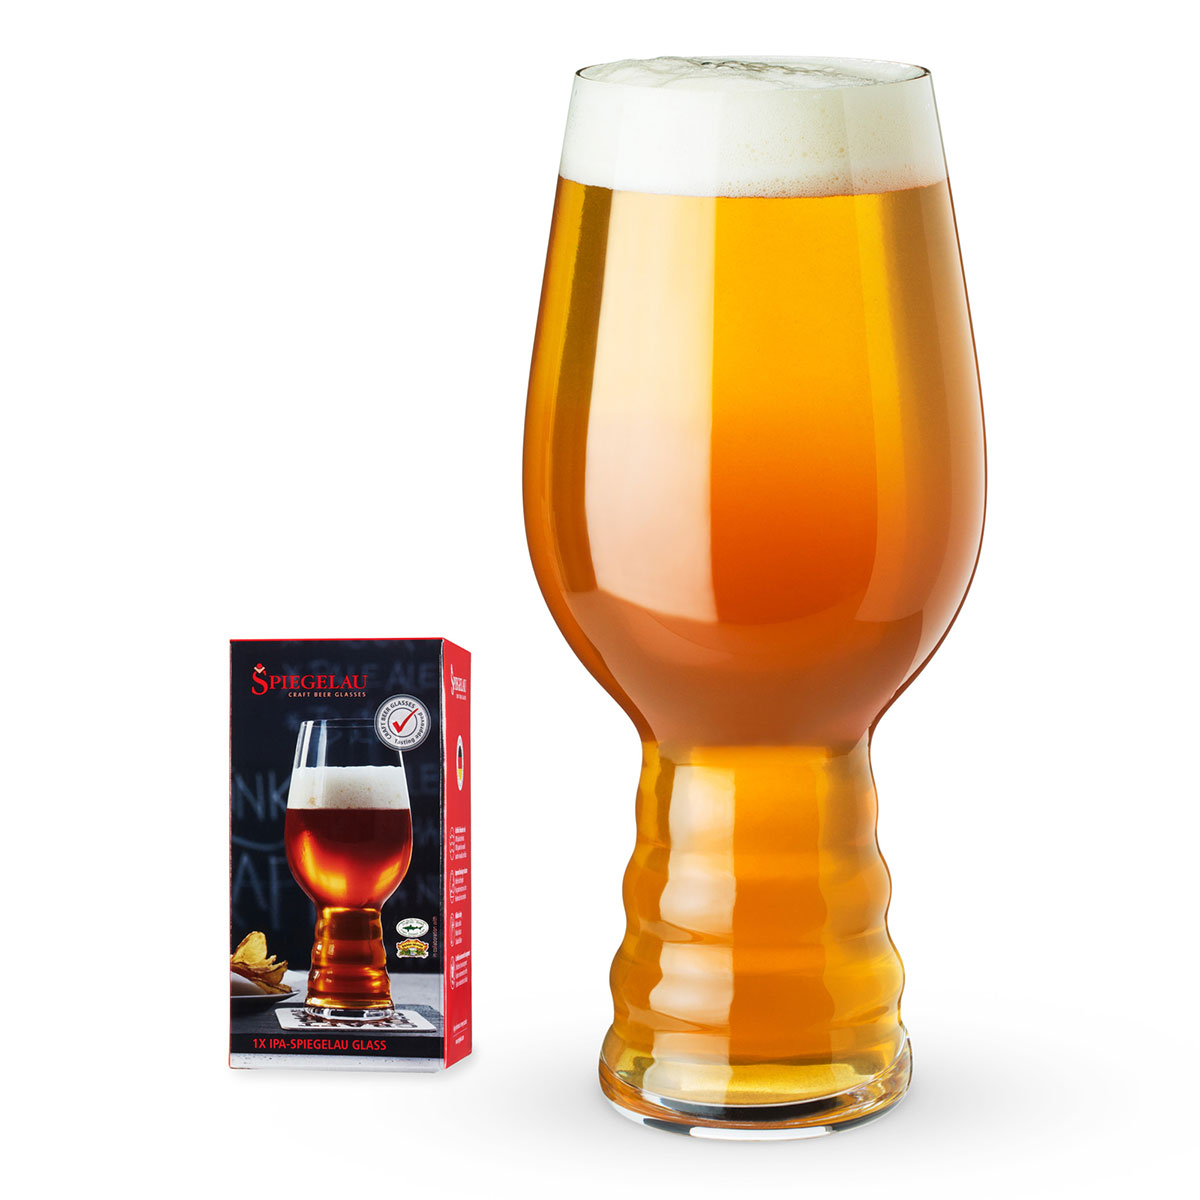 Spiegelau Beer Classics 19.1 oz IPA Glass, Single